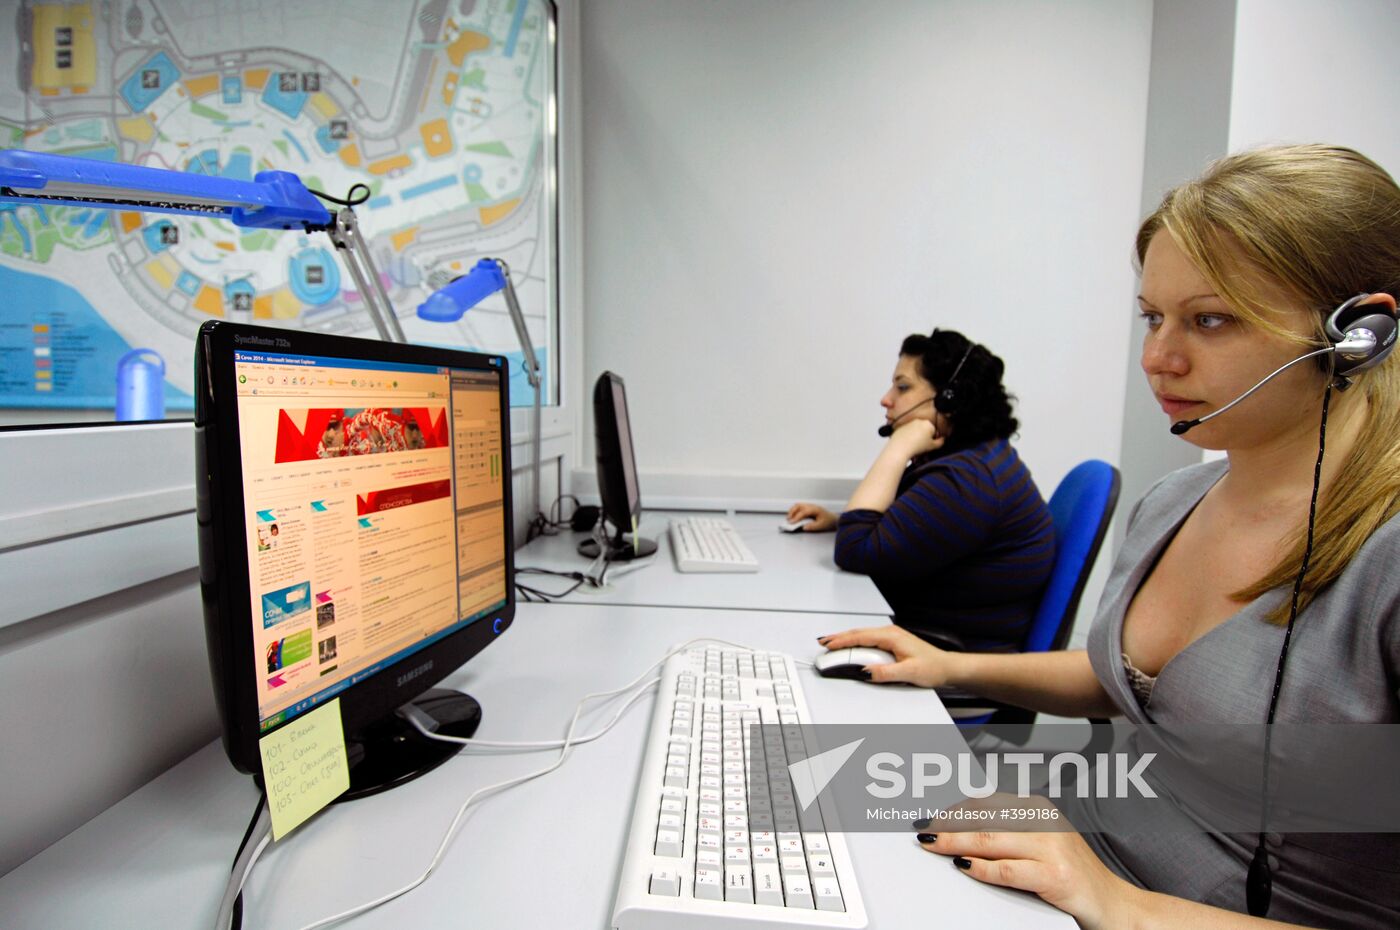 Joint Information Center Sochi 2014 in Sochi